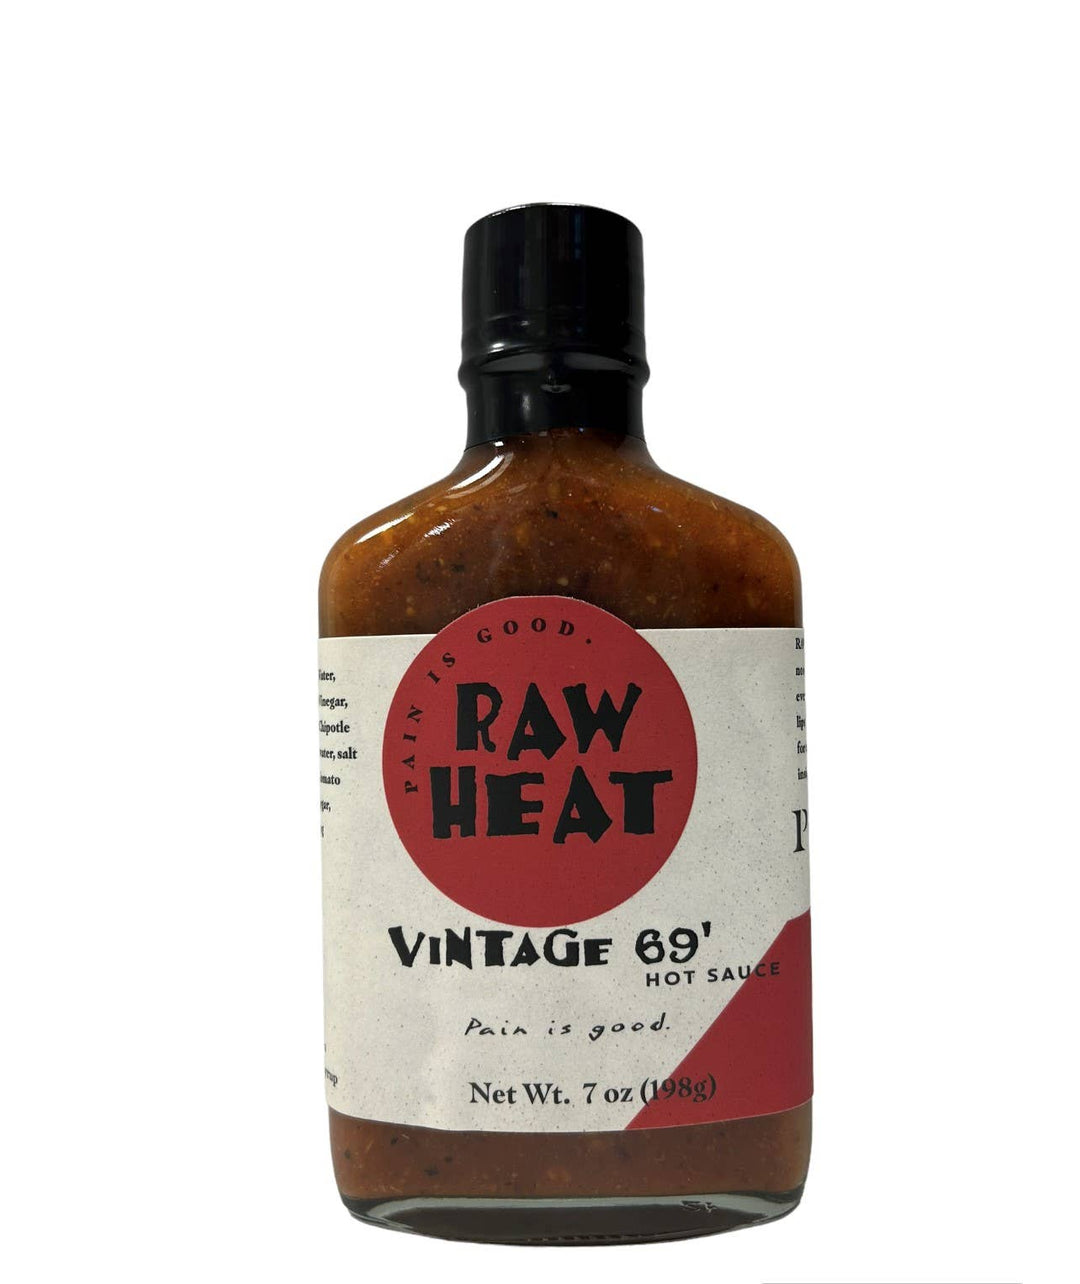 Pain is Good Raw Heat Vintage 69' Hot Sauce